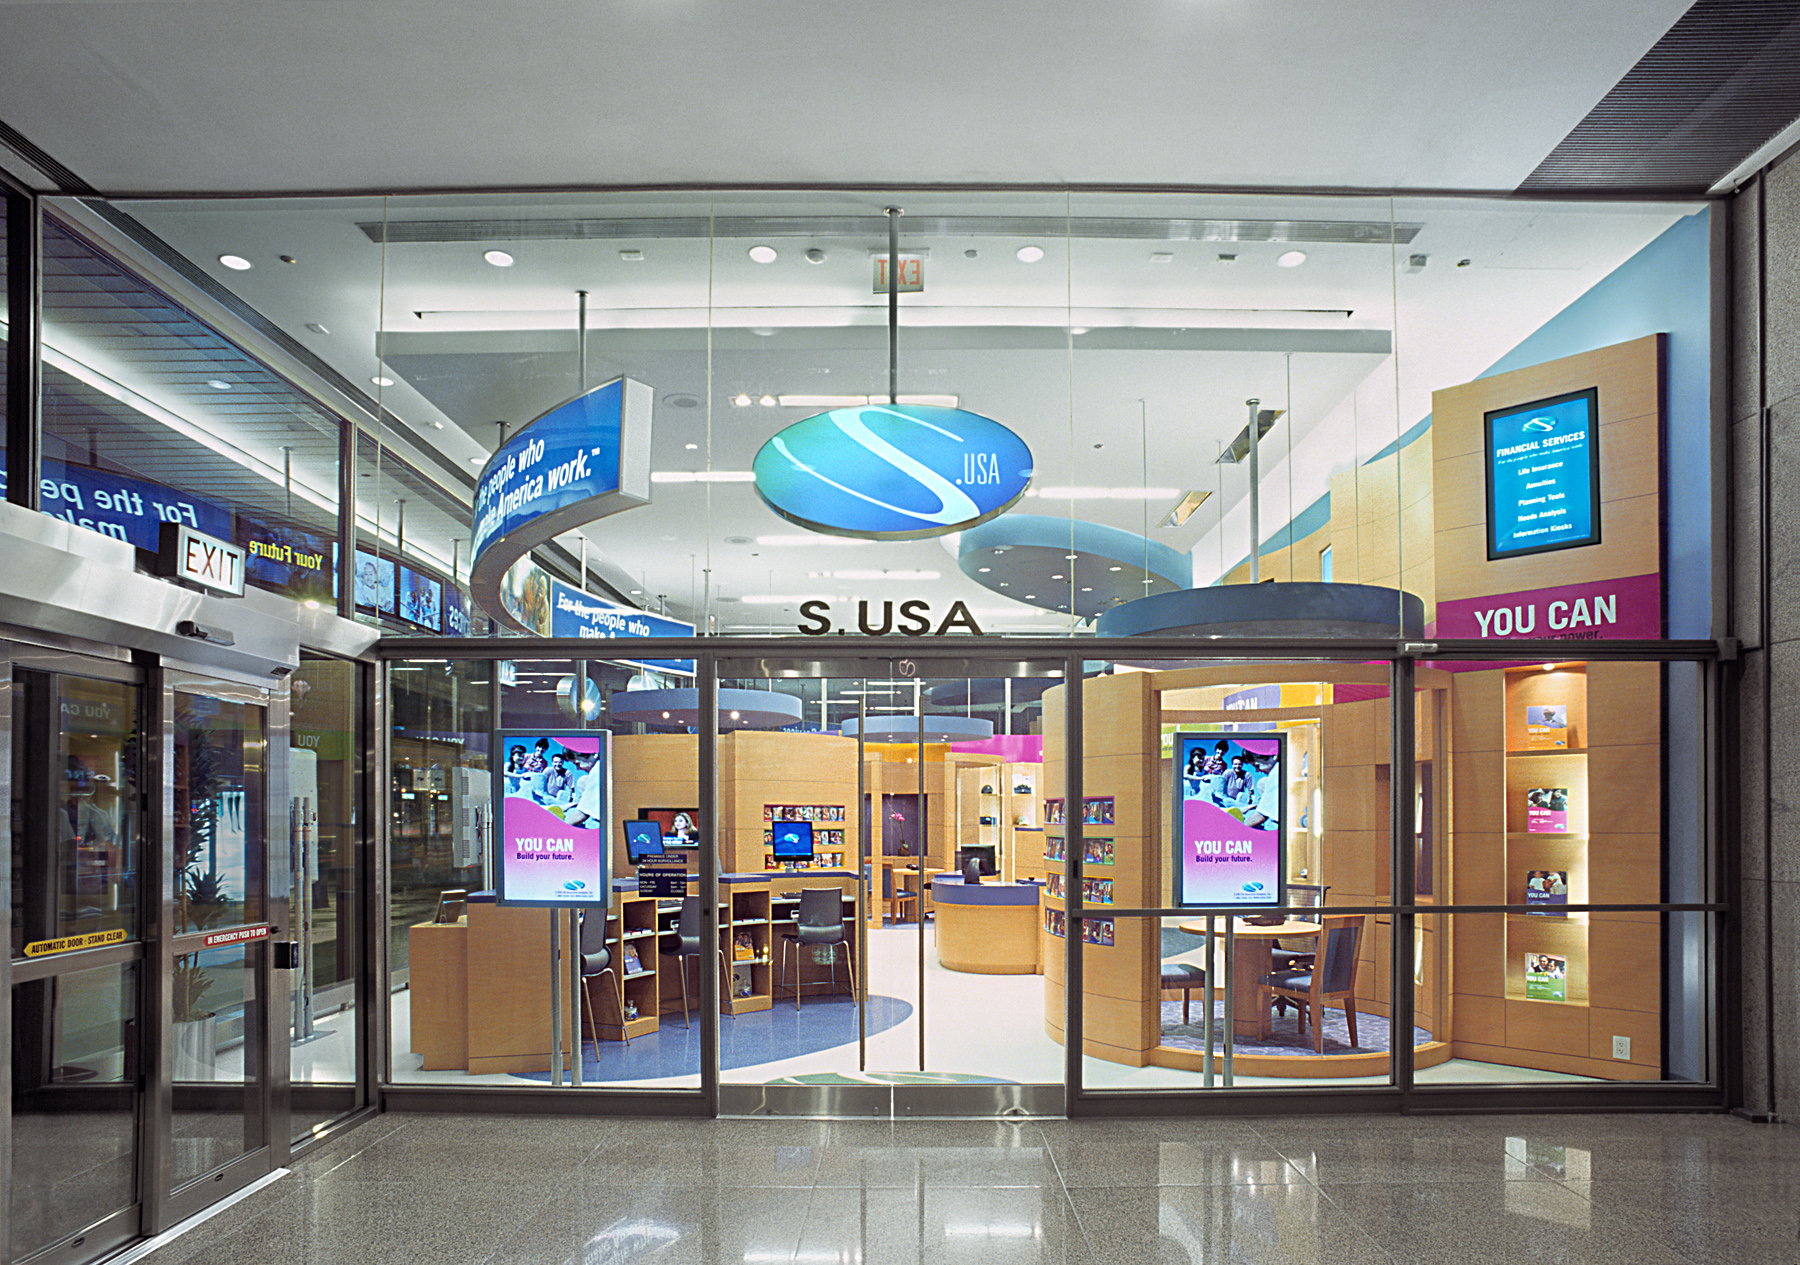 SBLI USA Financial Services - Retail Store. Tobin Parnes Design. Retail Design. Exterior.